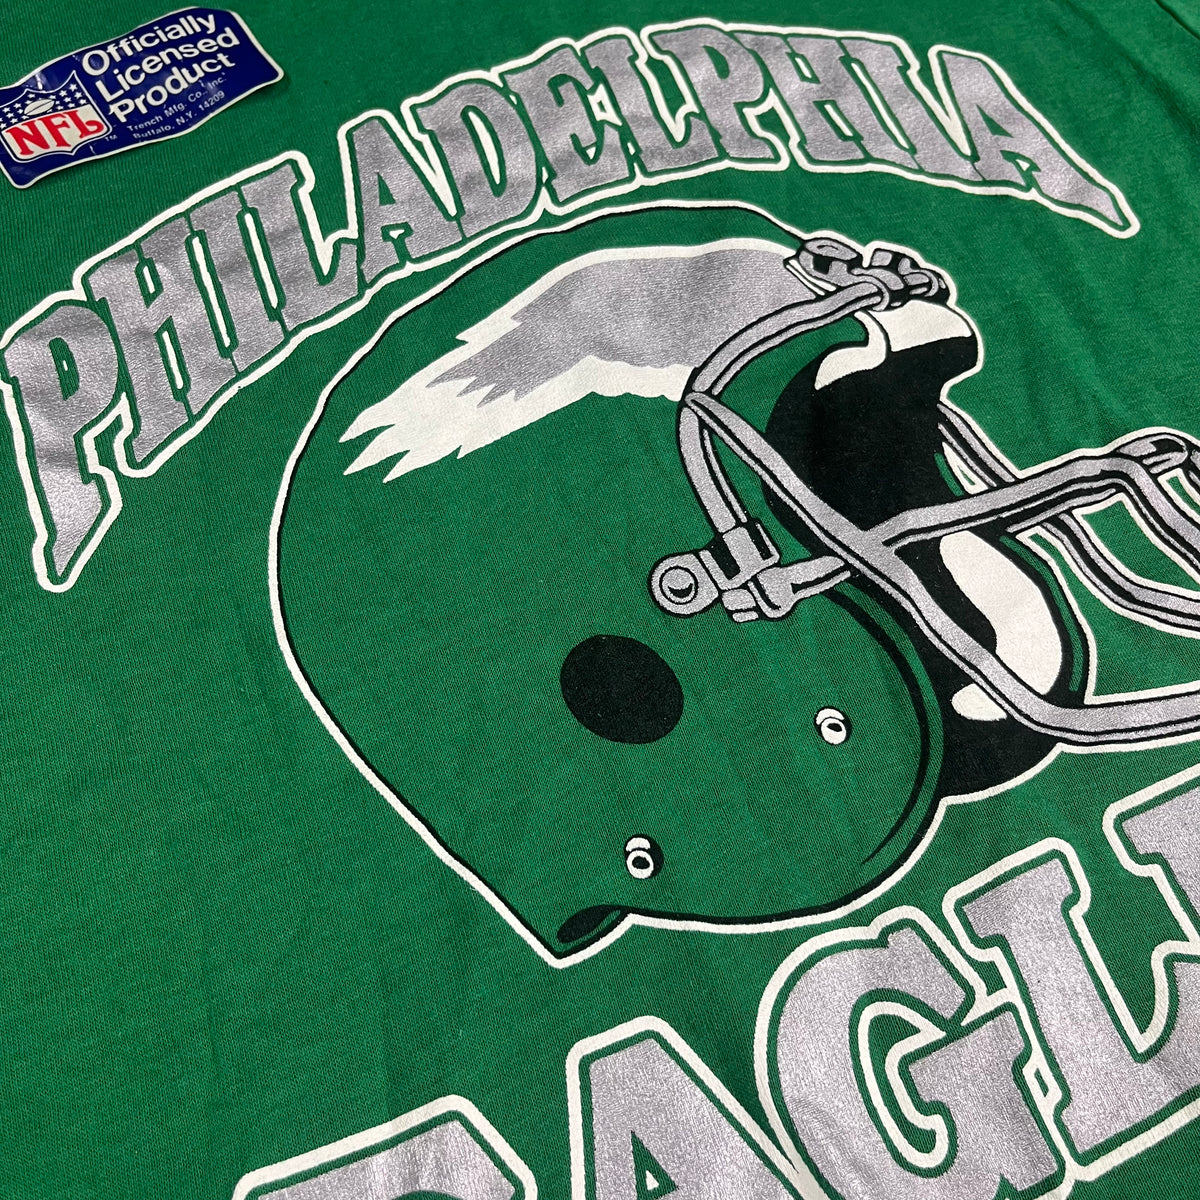 philadelphia eagles vintage jersey